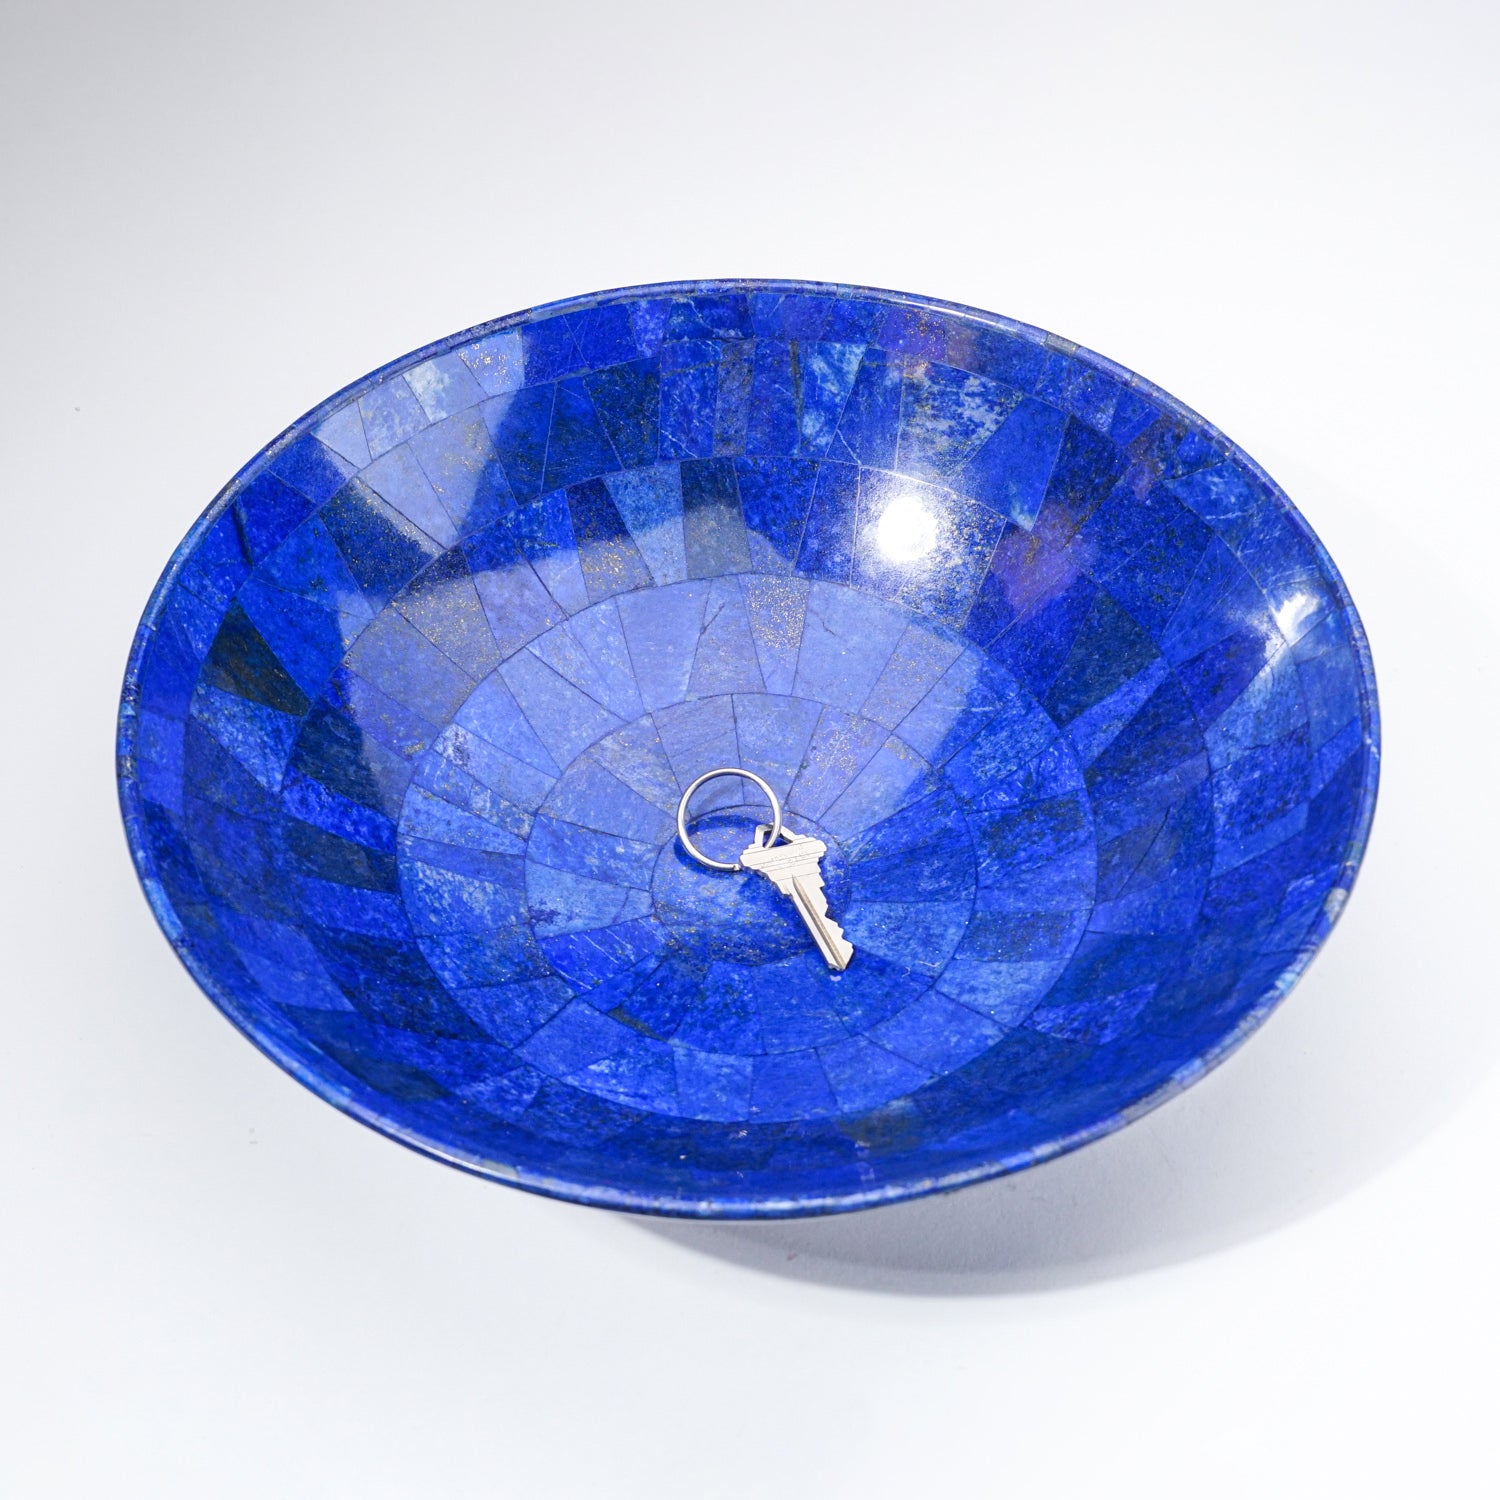 Genuine Polished Lapis Lazuli Bowl (3.6 lbs)